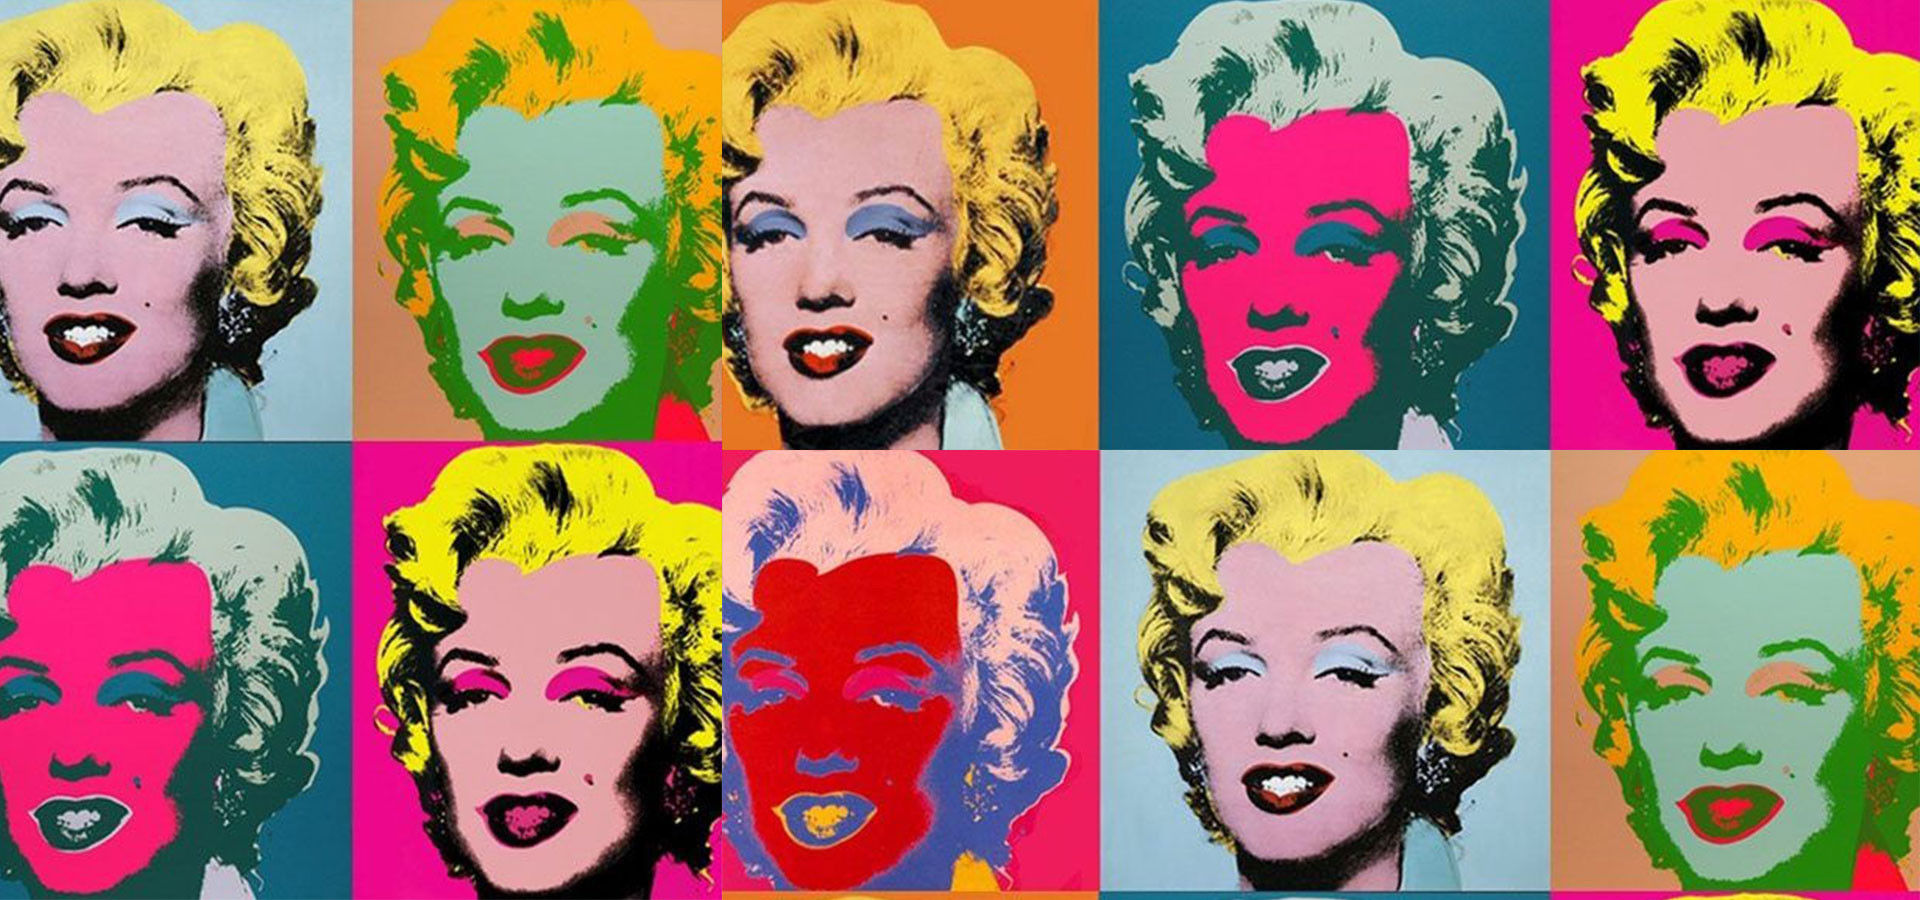 Échantillon Pop Art : le diptyque de Marilyn Monroe par Andy Warhol